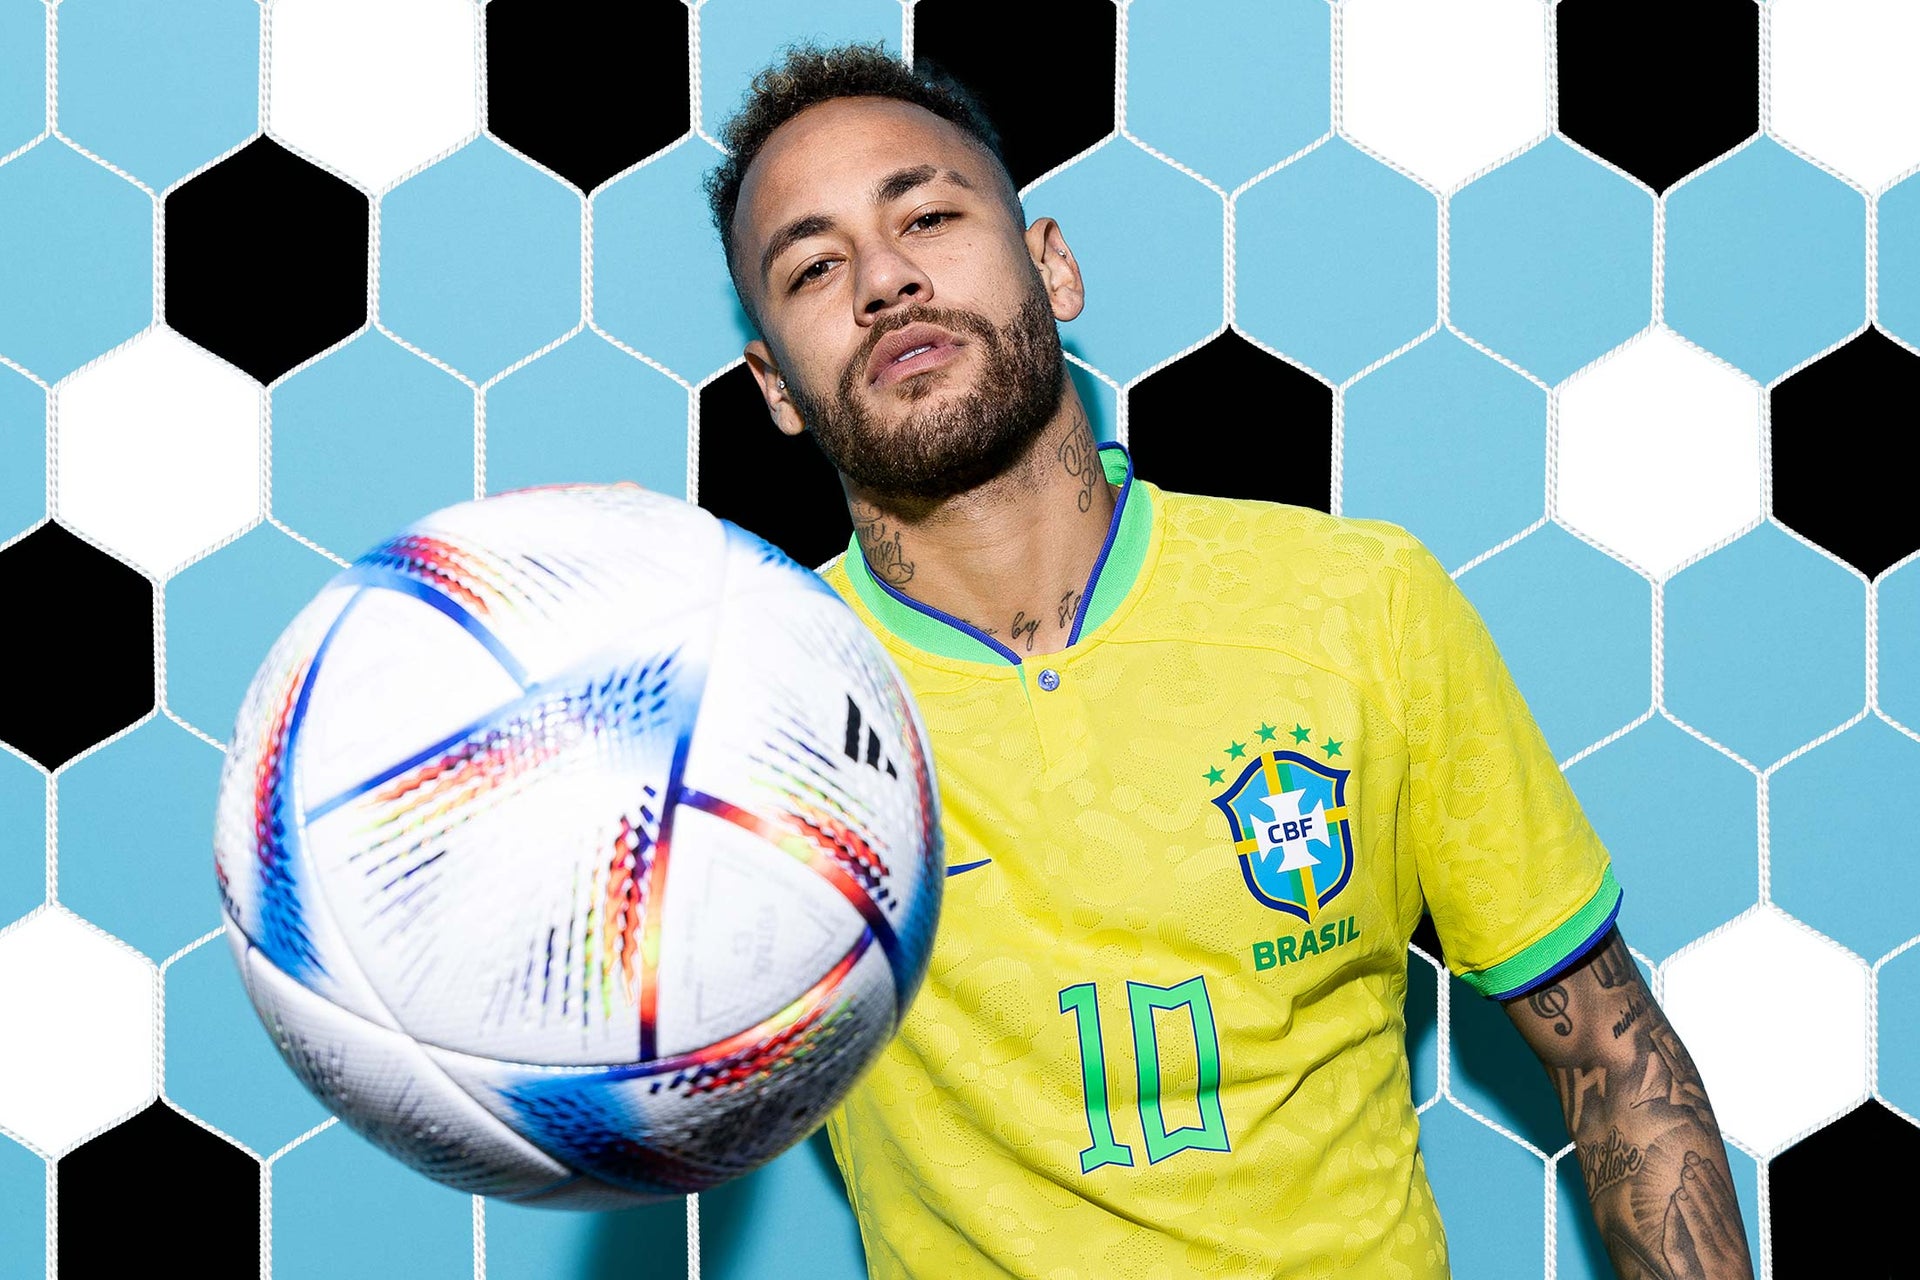 Neymar If Brazil wins the World Cup, it’ll define his legacy.